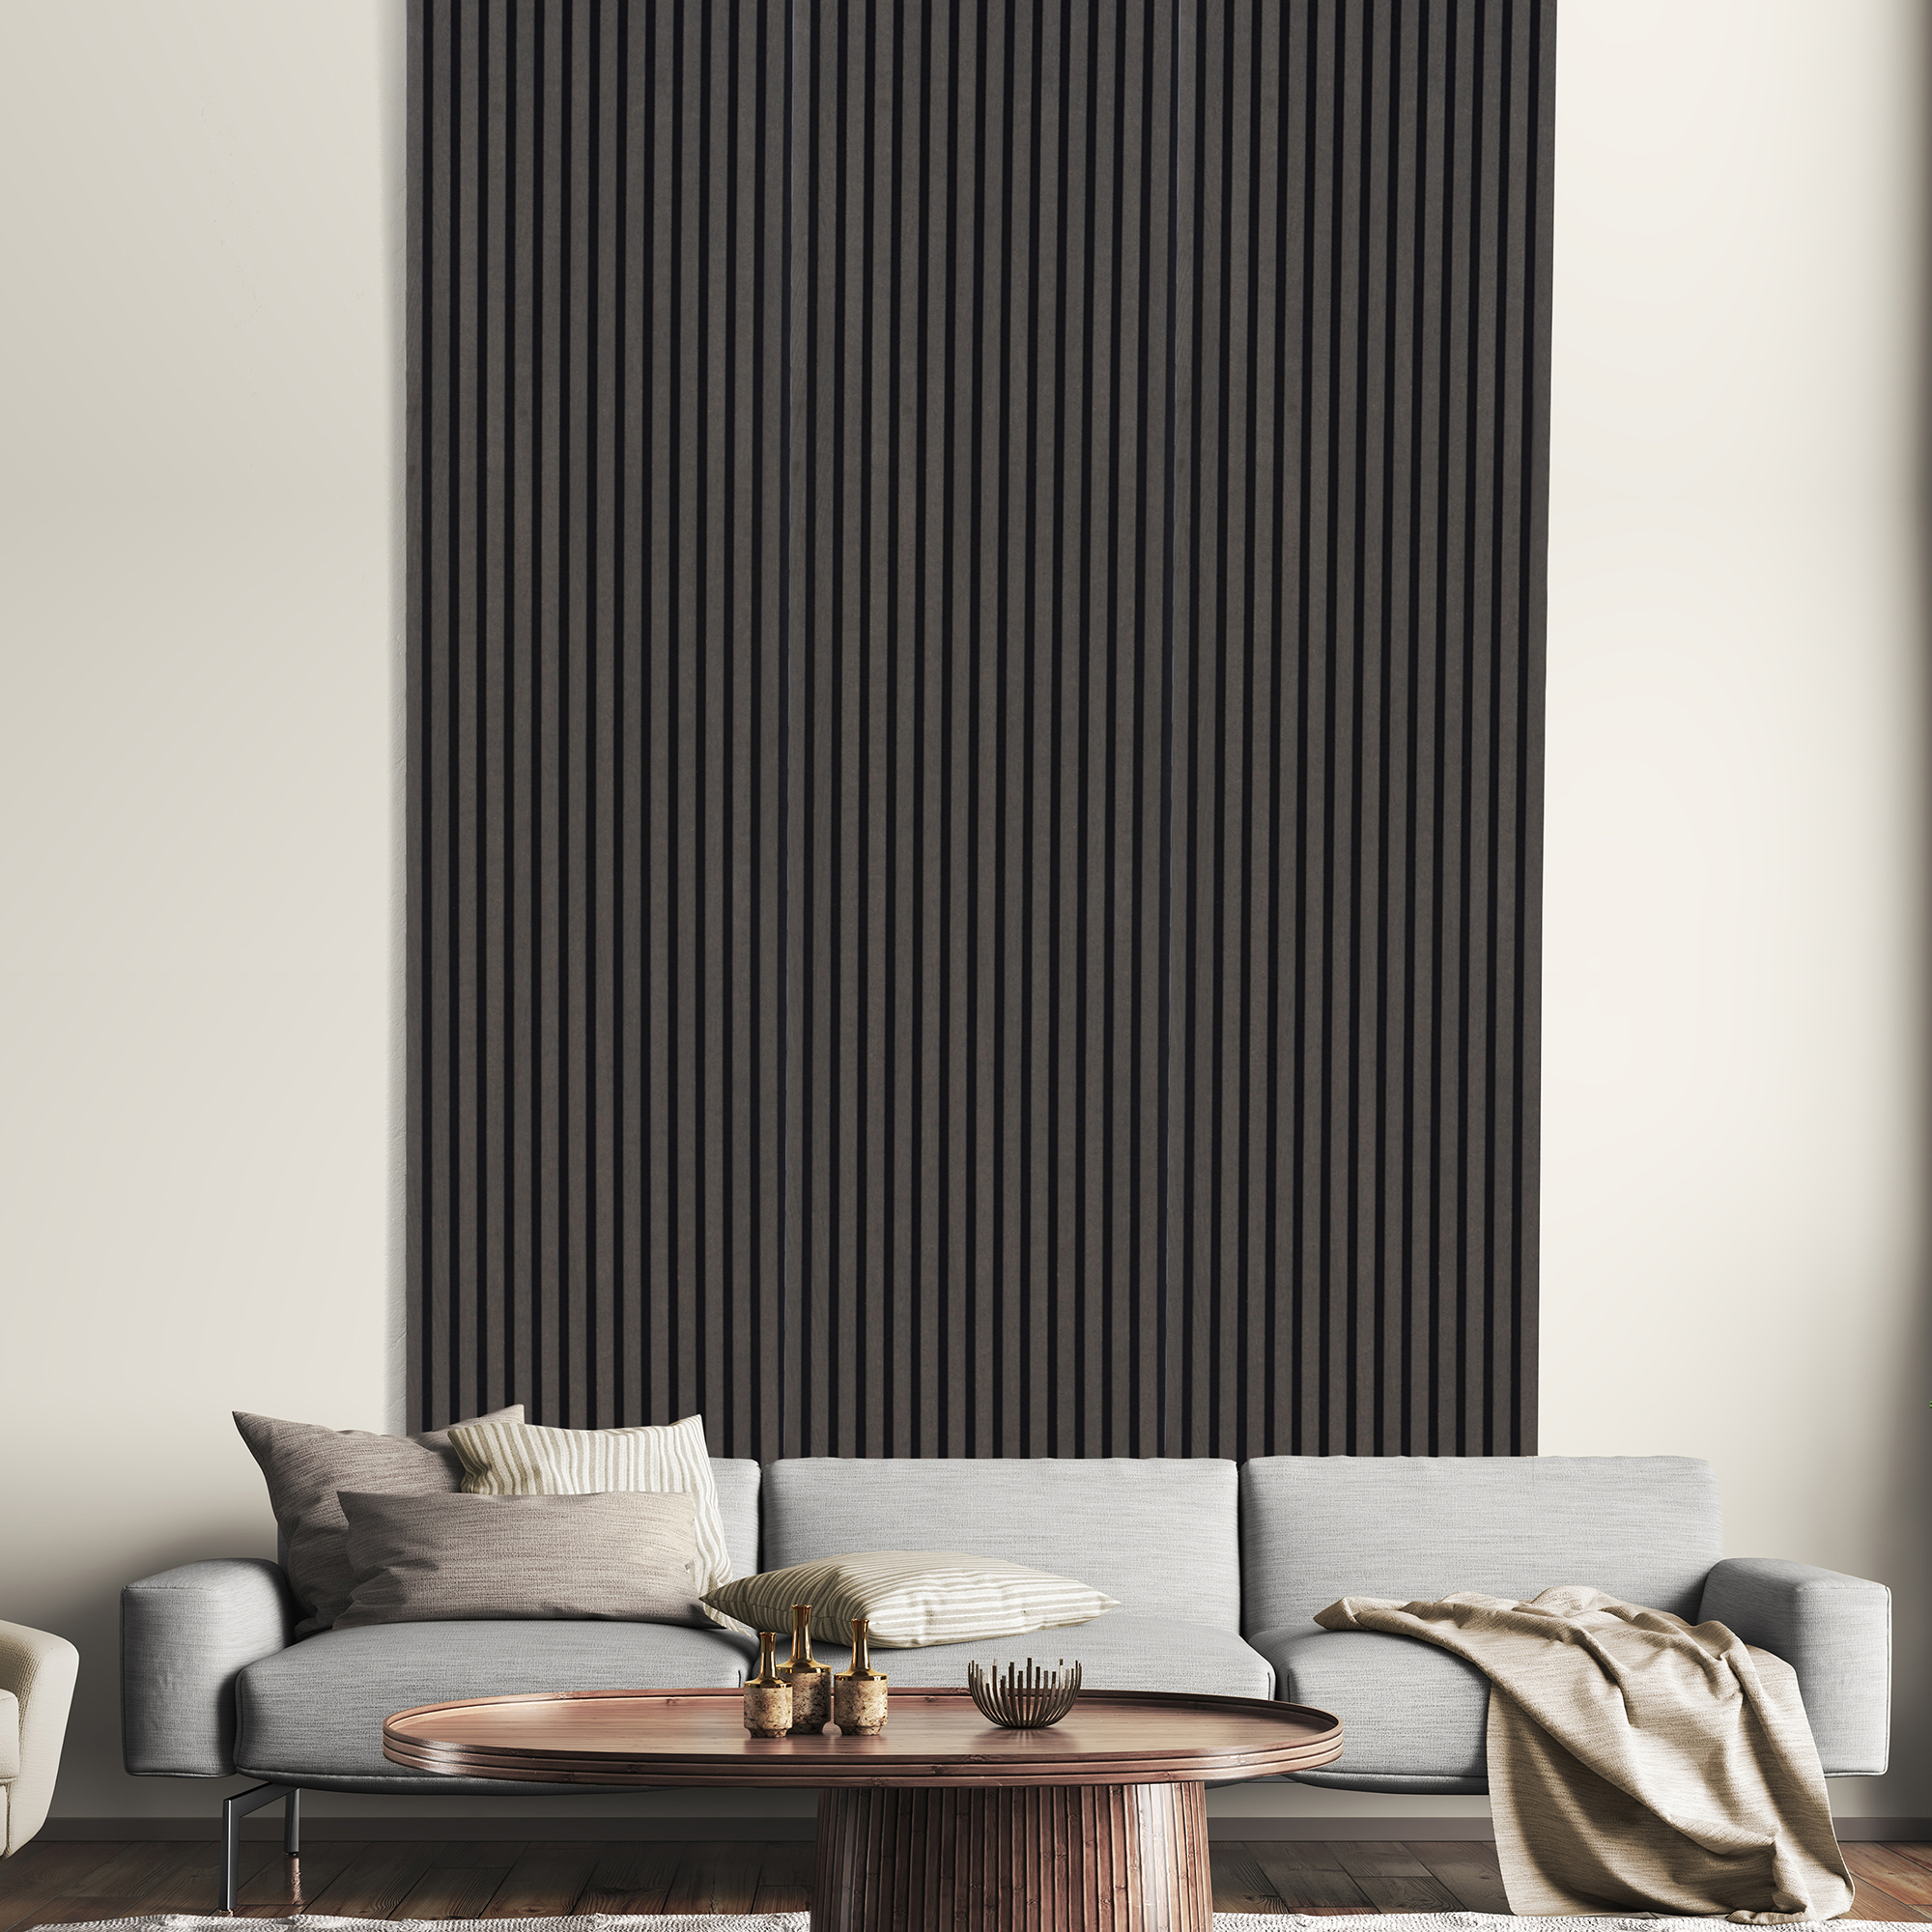 Acoustic Slat Wall Smoked Oak Veneer Wood Panels - 19 x 573 x 2400mm